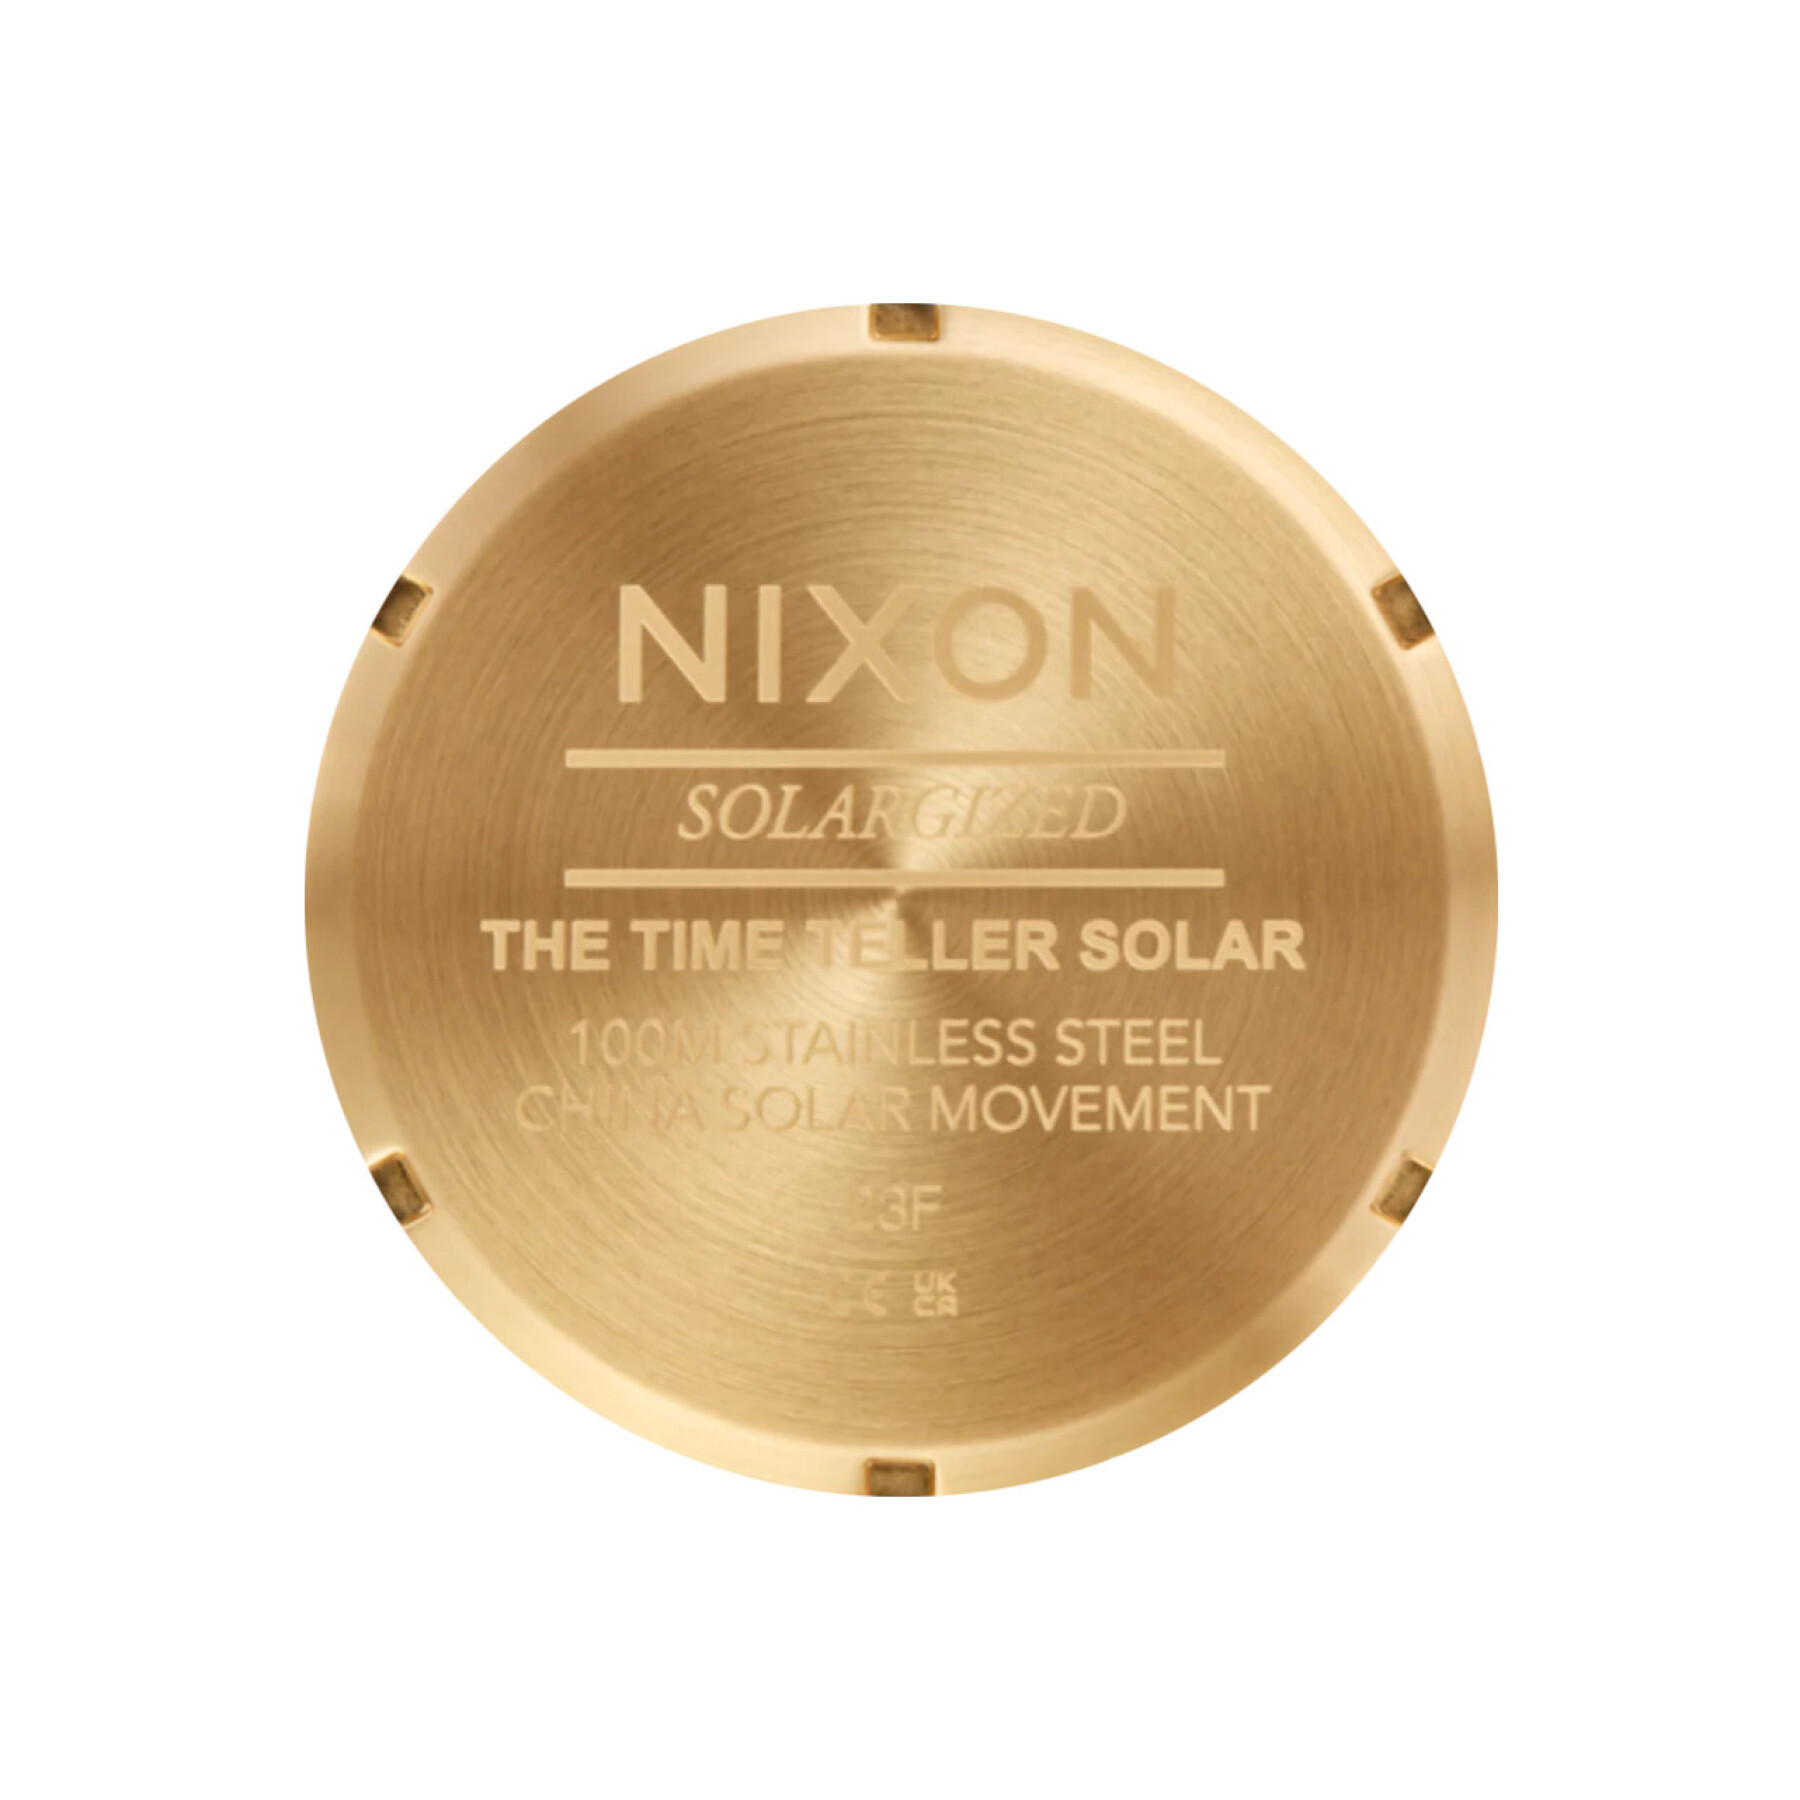 Ver Nixon Time Teller Solar